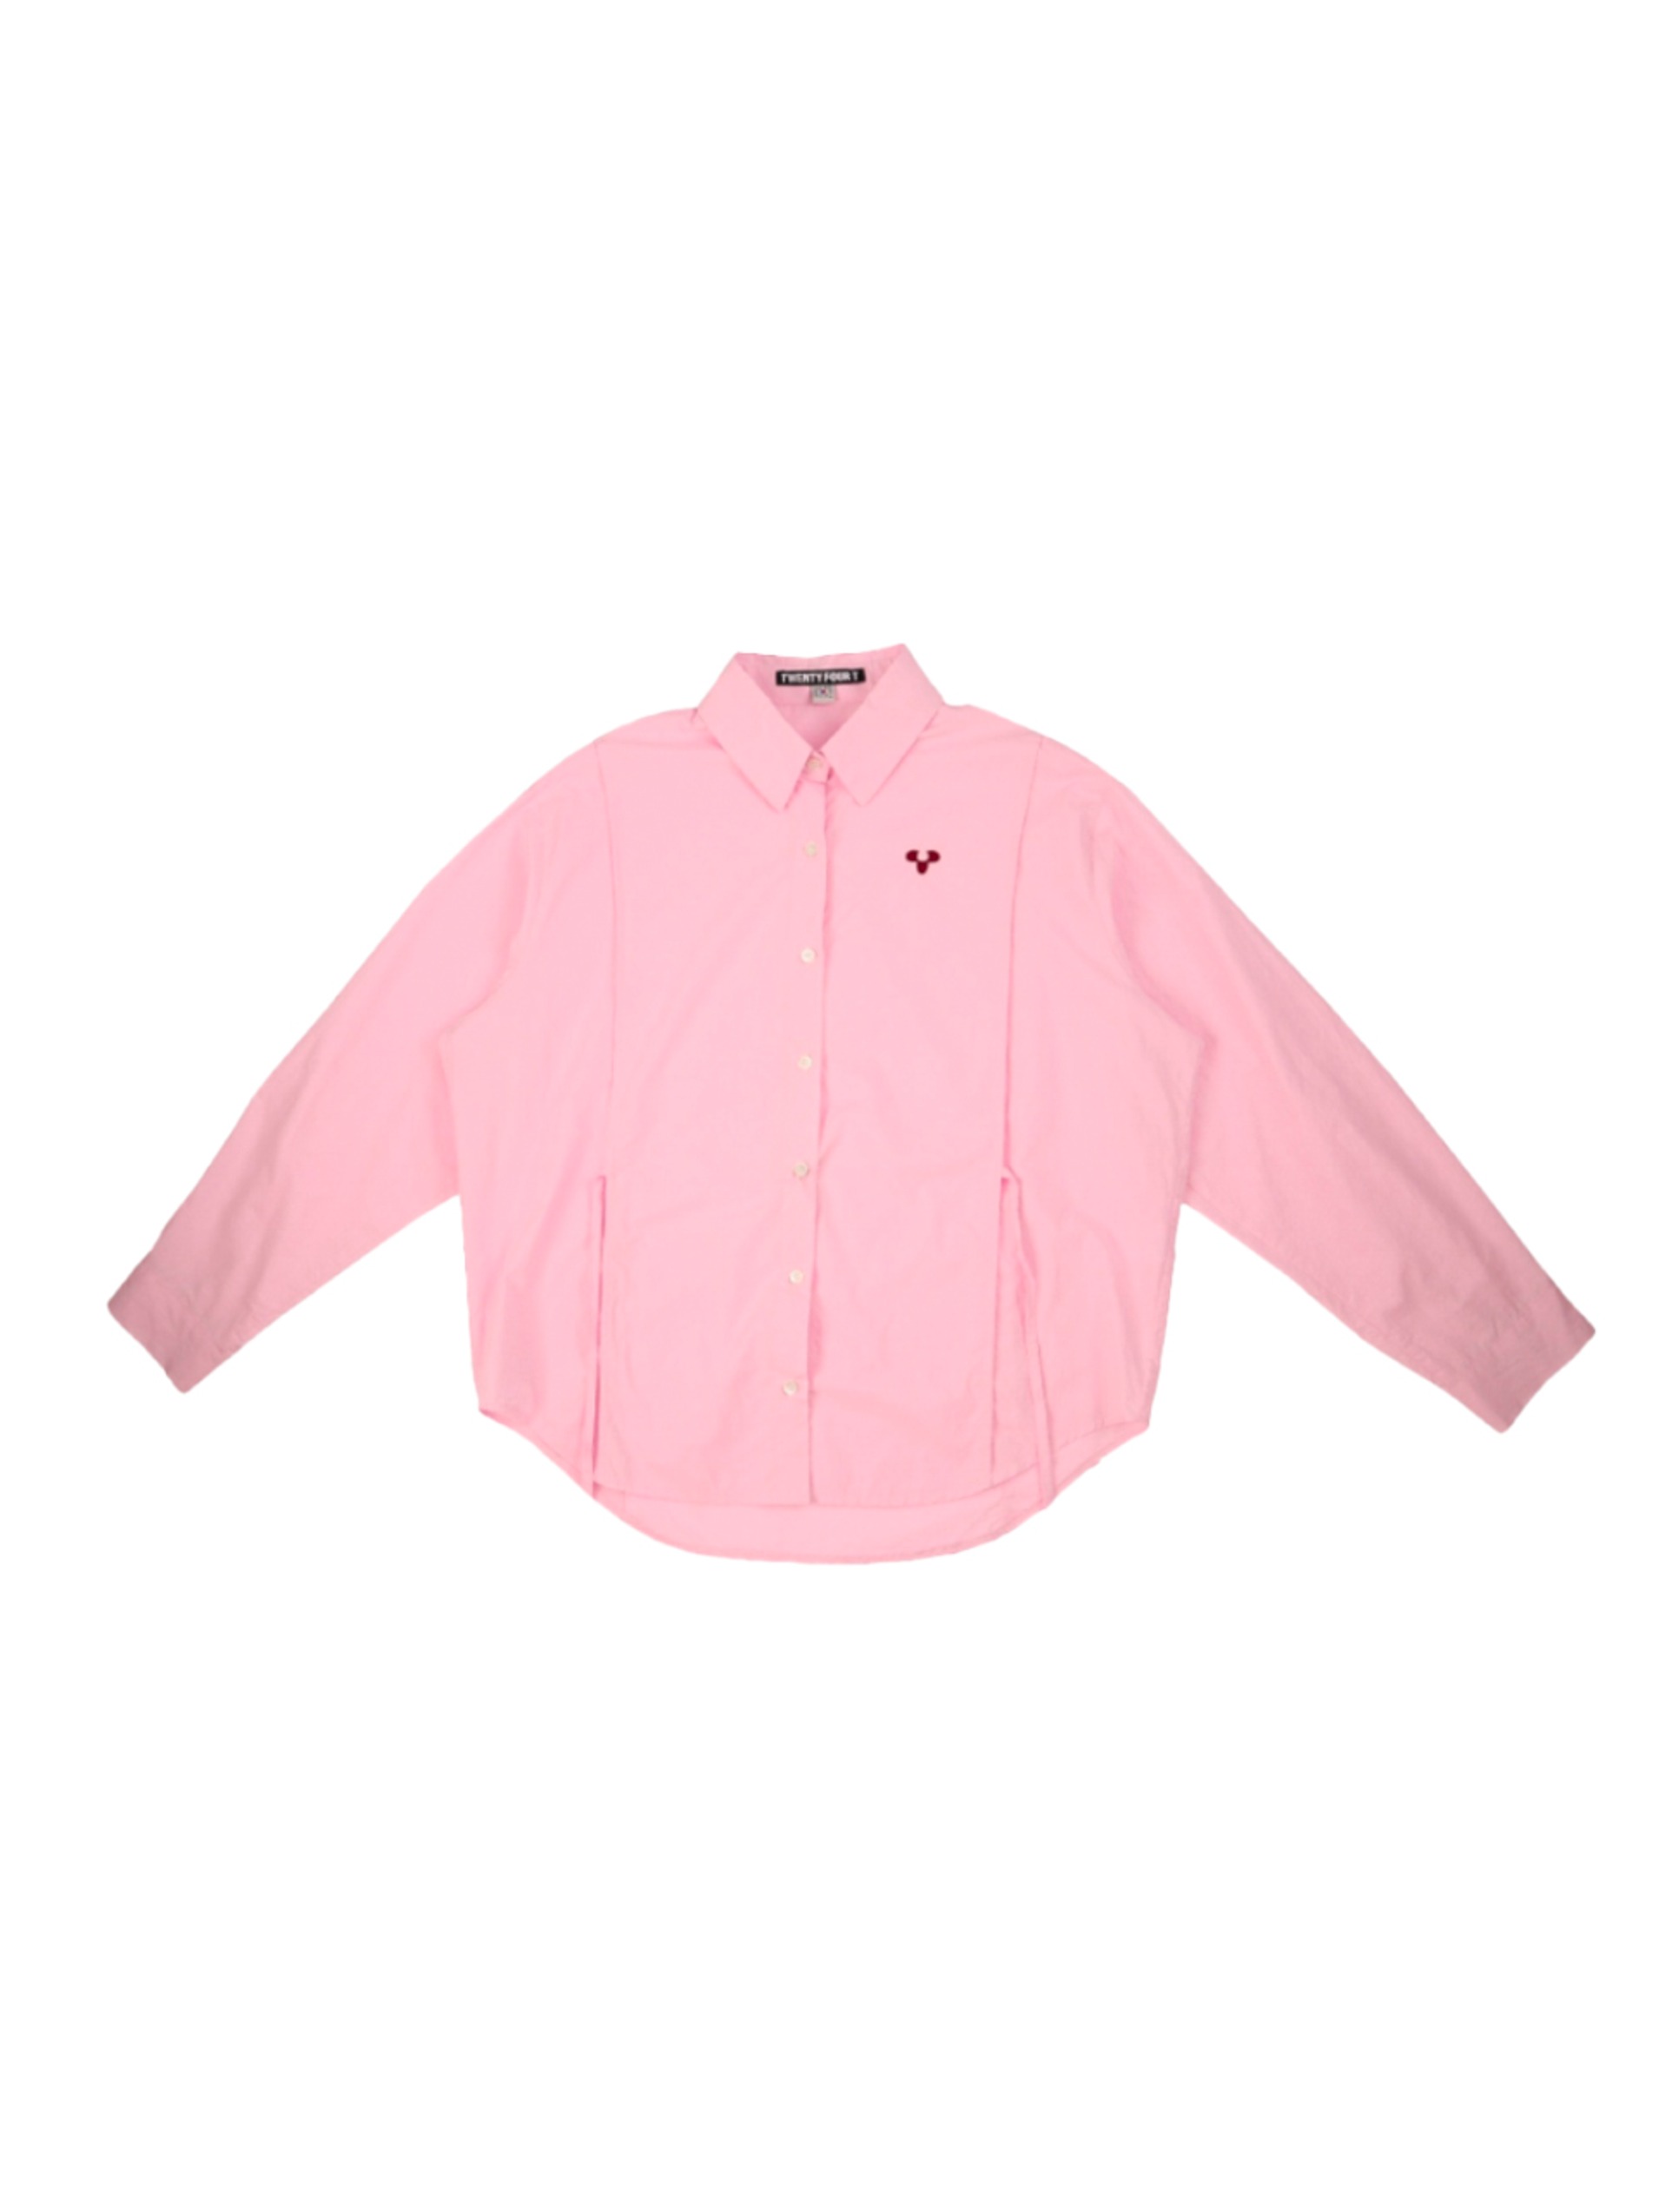 Ribbon Tie Shirts Pink